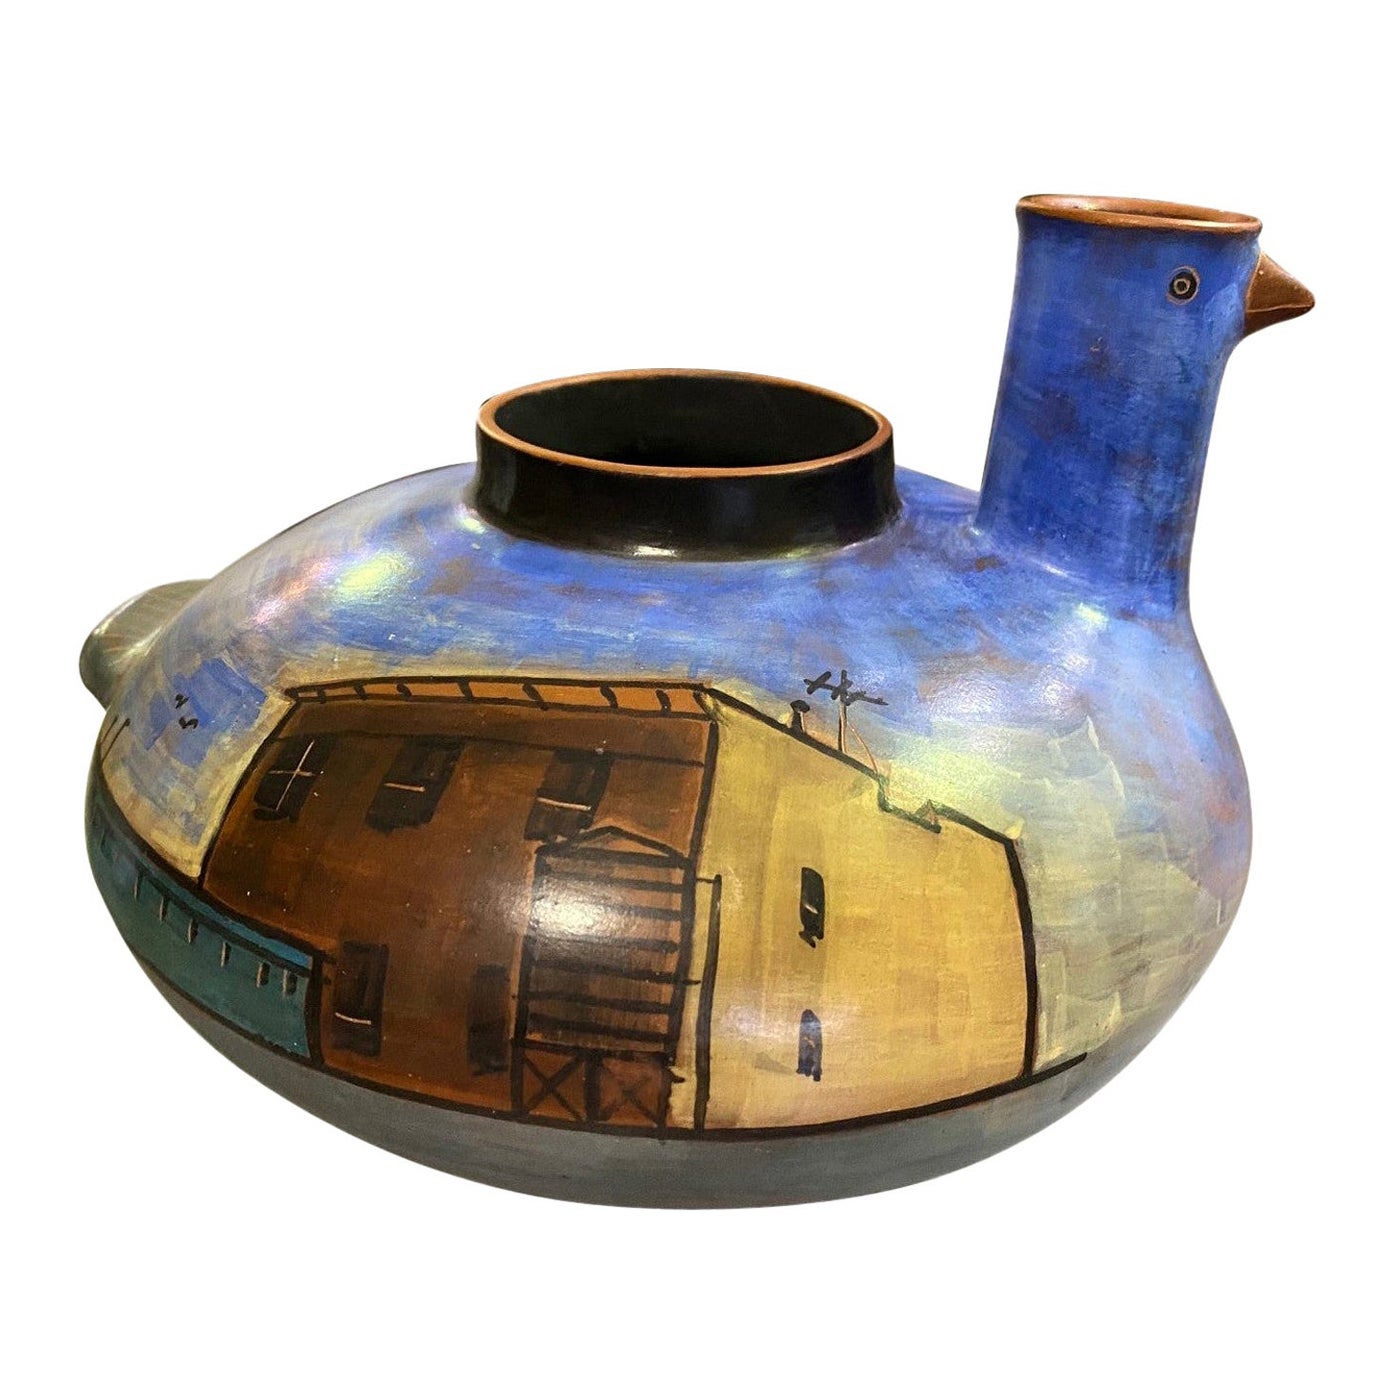 Lidya Buzio Signed New York Artist Hand Painted Pottery Ceramic Vessel Vase 1980 For Sale